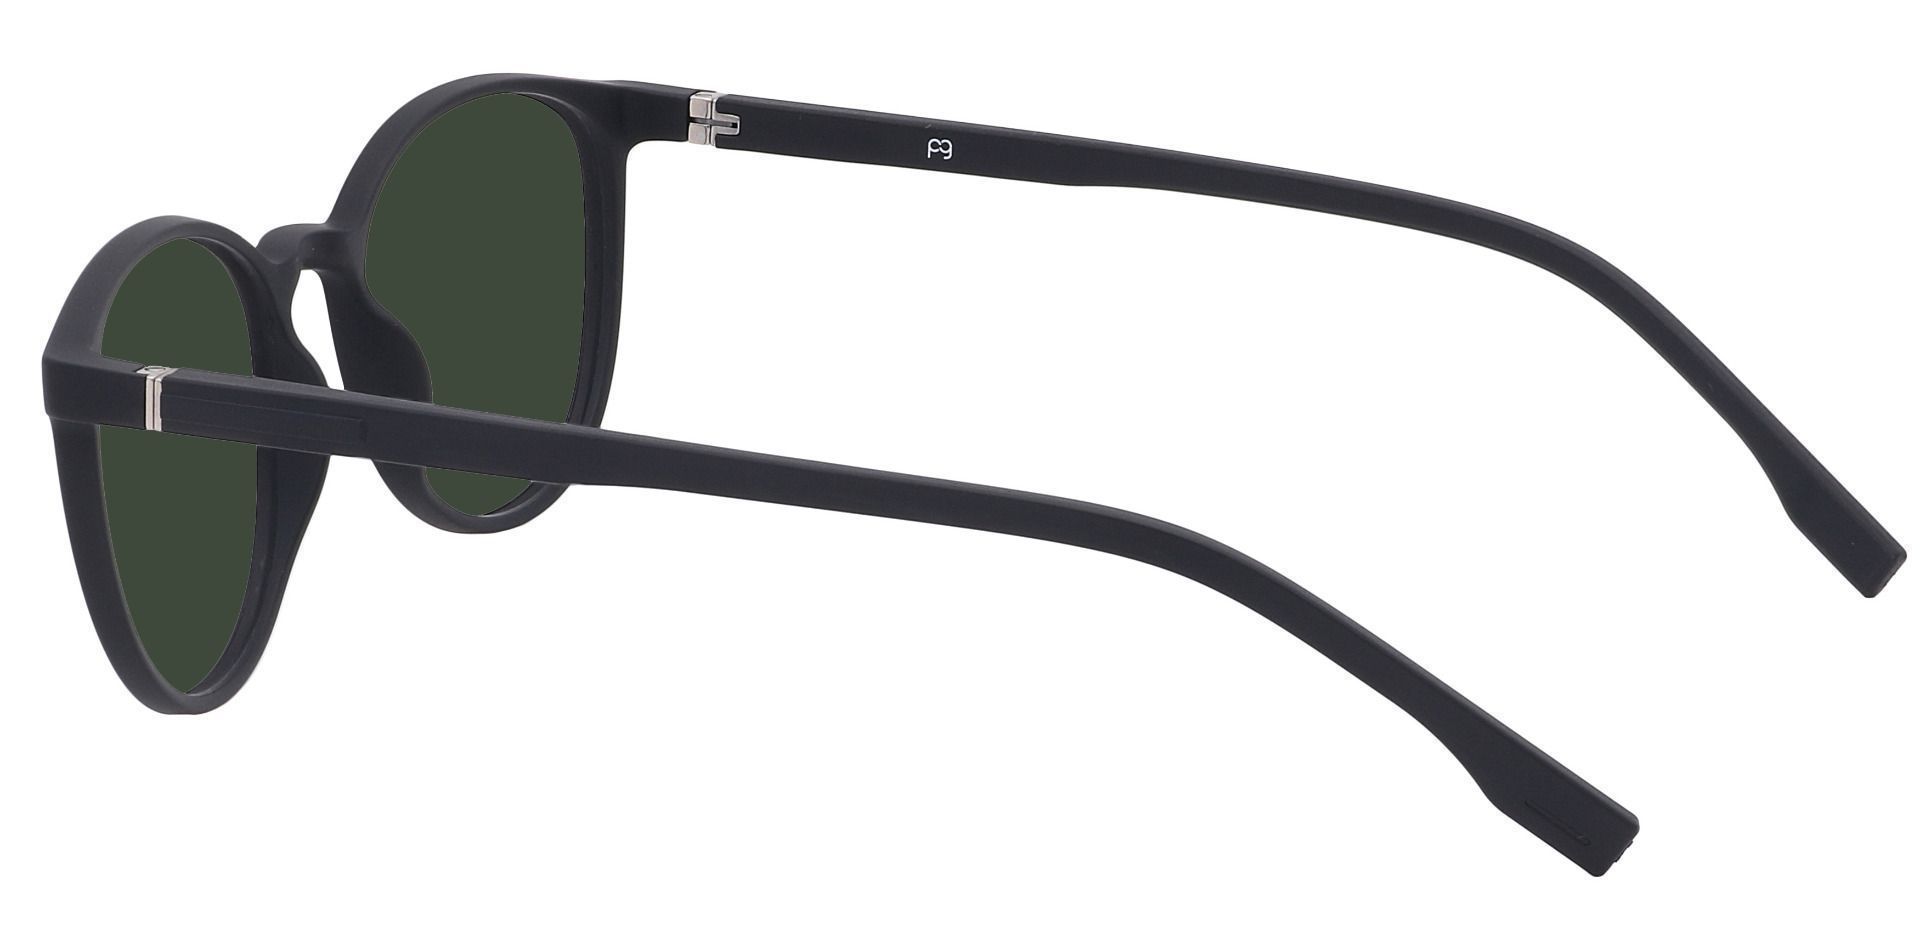 Bay Round Progressive Sunglasses - Black Frame With Green Lenses